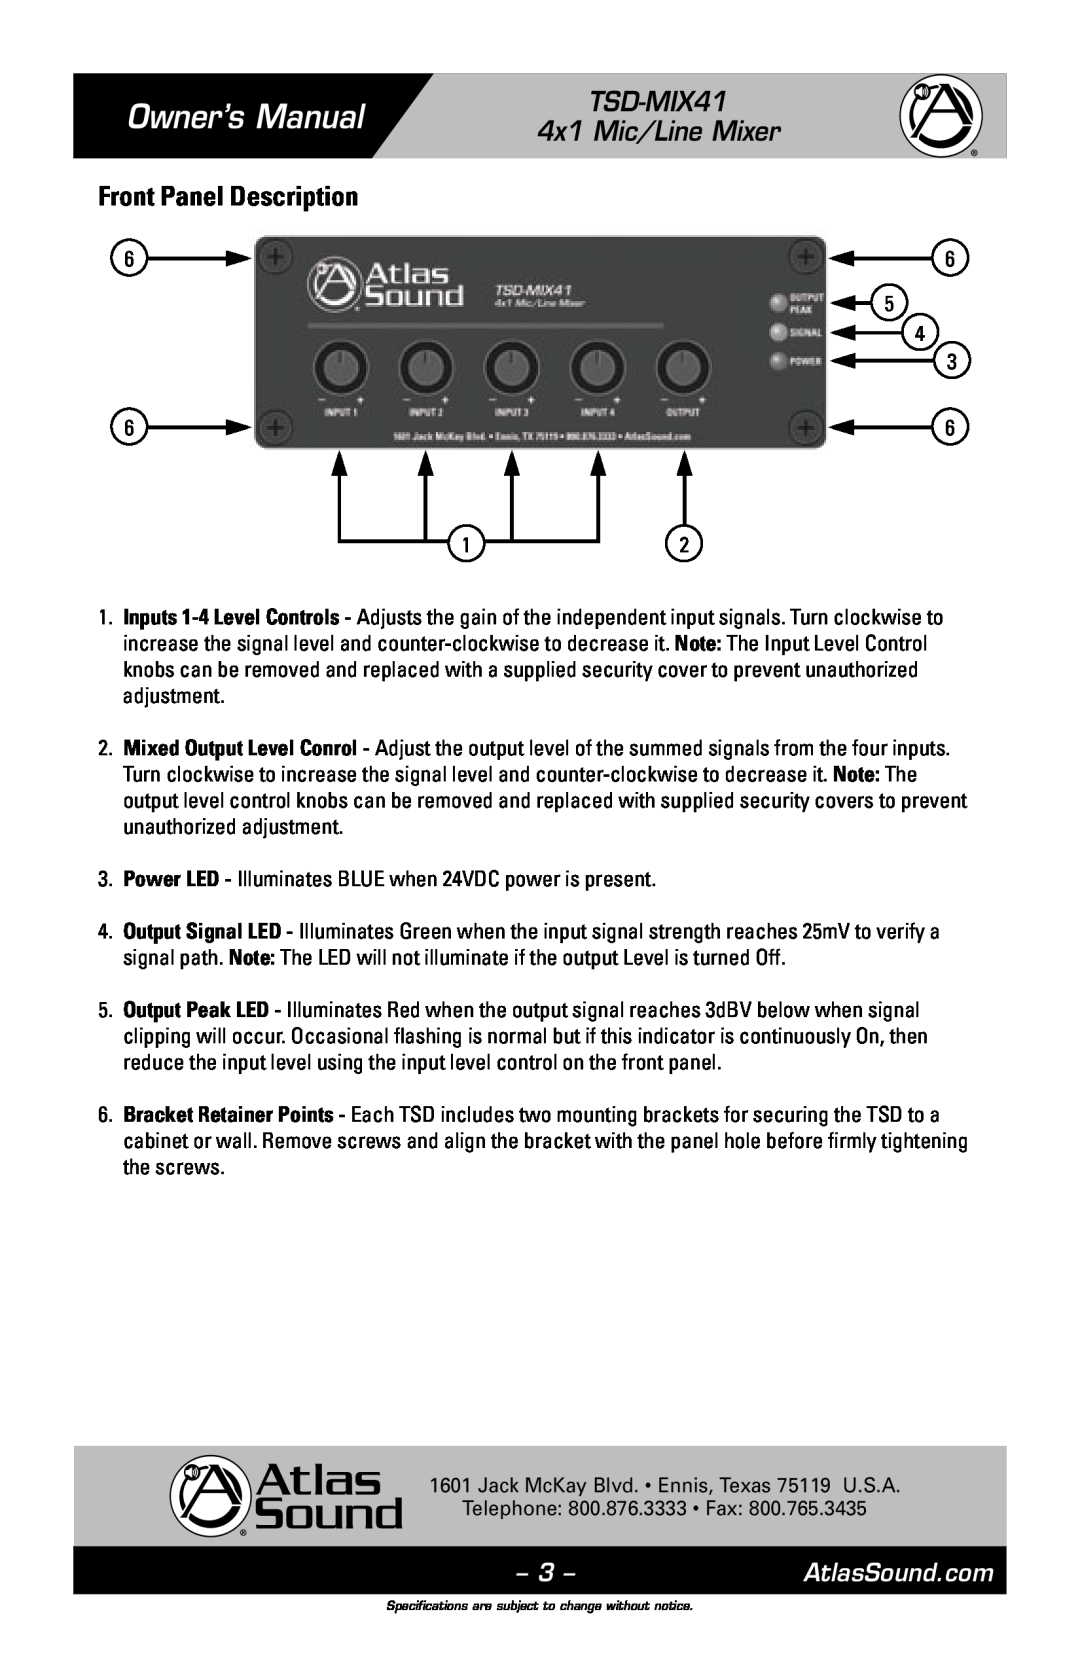 Atlas Sound owner manual Front Panel Description, Owner’s Manual, TSD-MIX41 4x1 Mic/Line Mixer, AtlasSound.com 